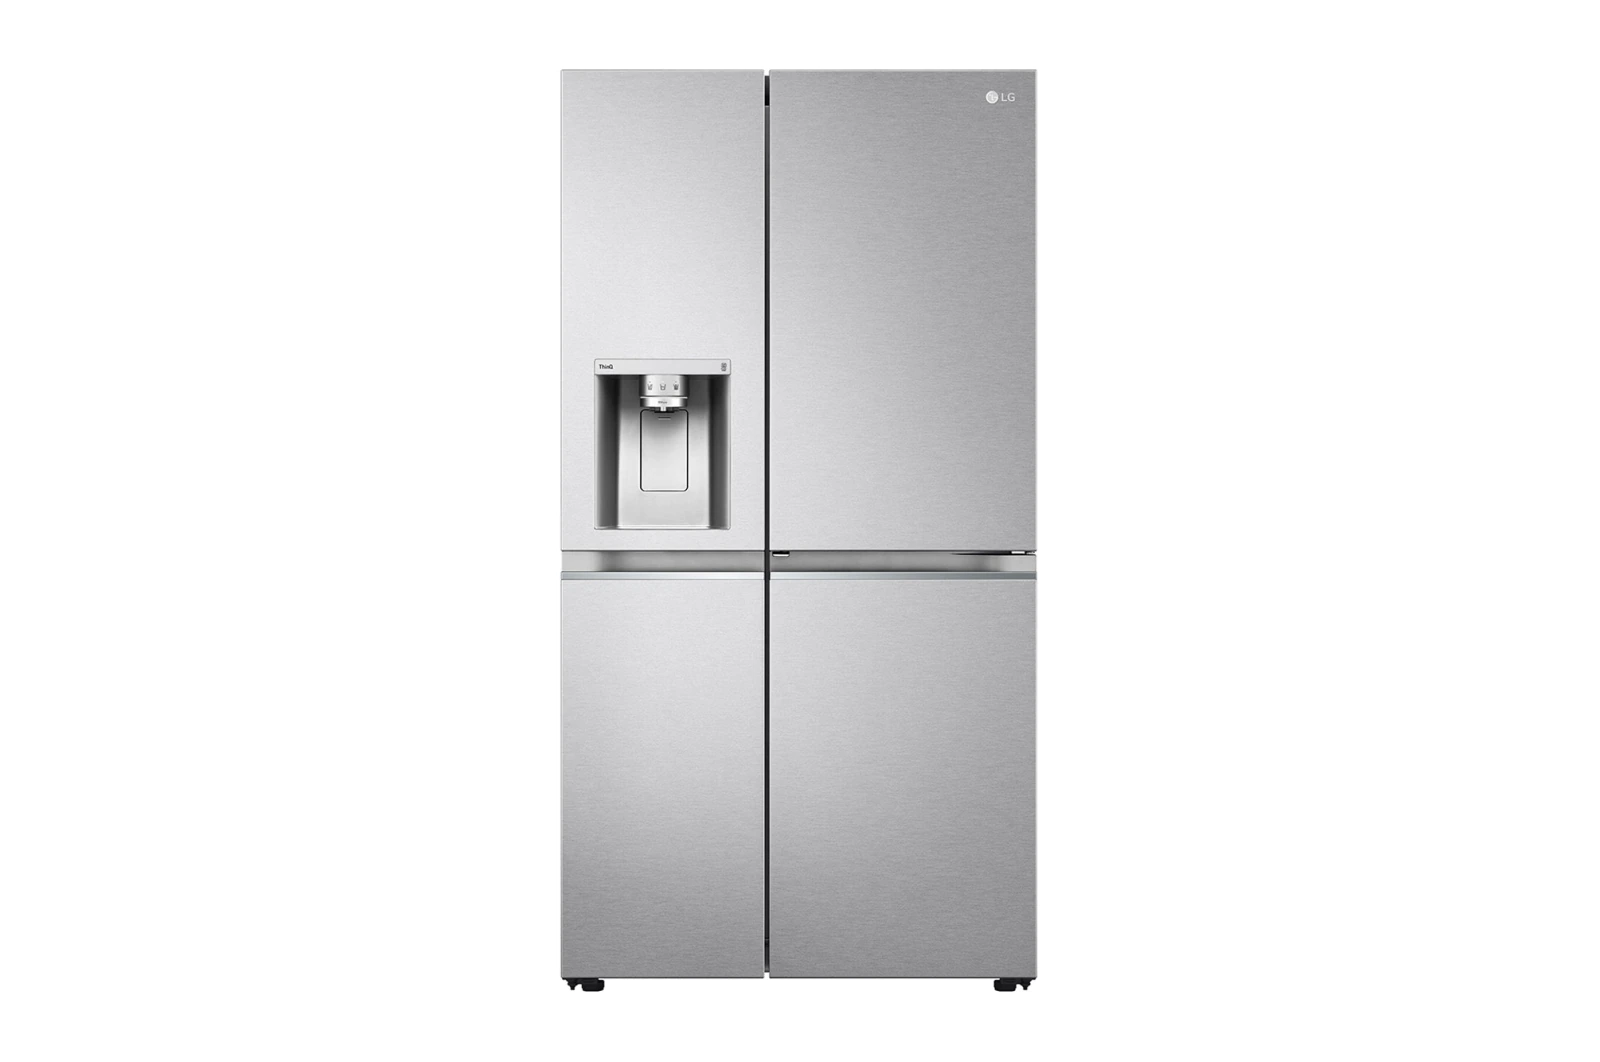 LG 611 Liters Refrigerator With UVnano™ Technology - Silver